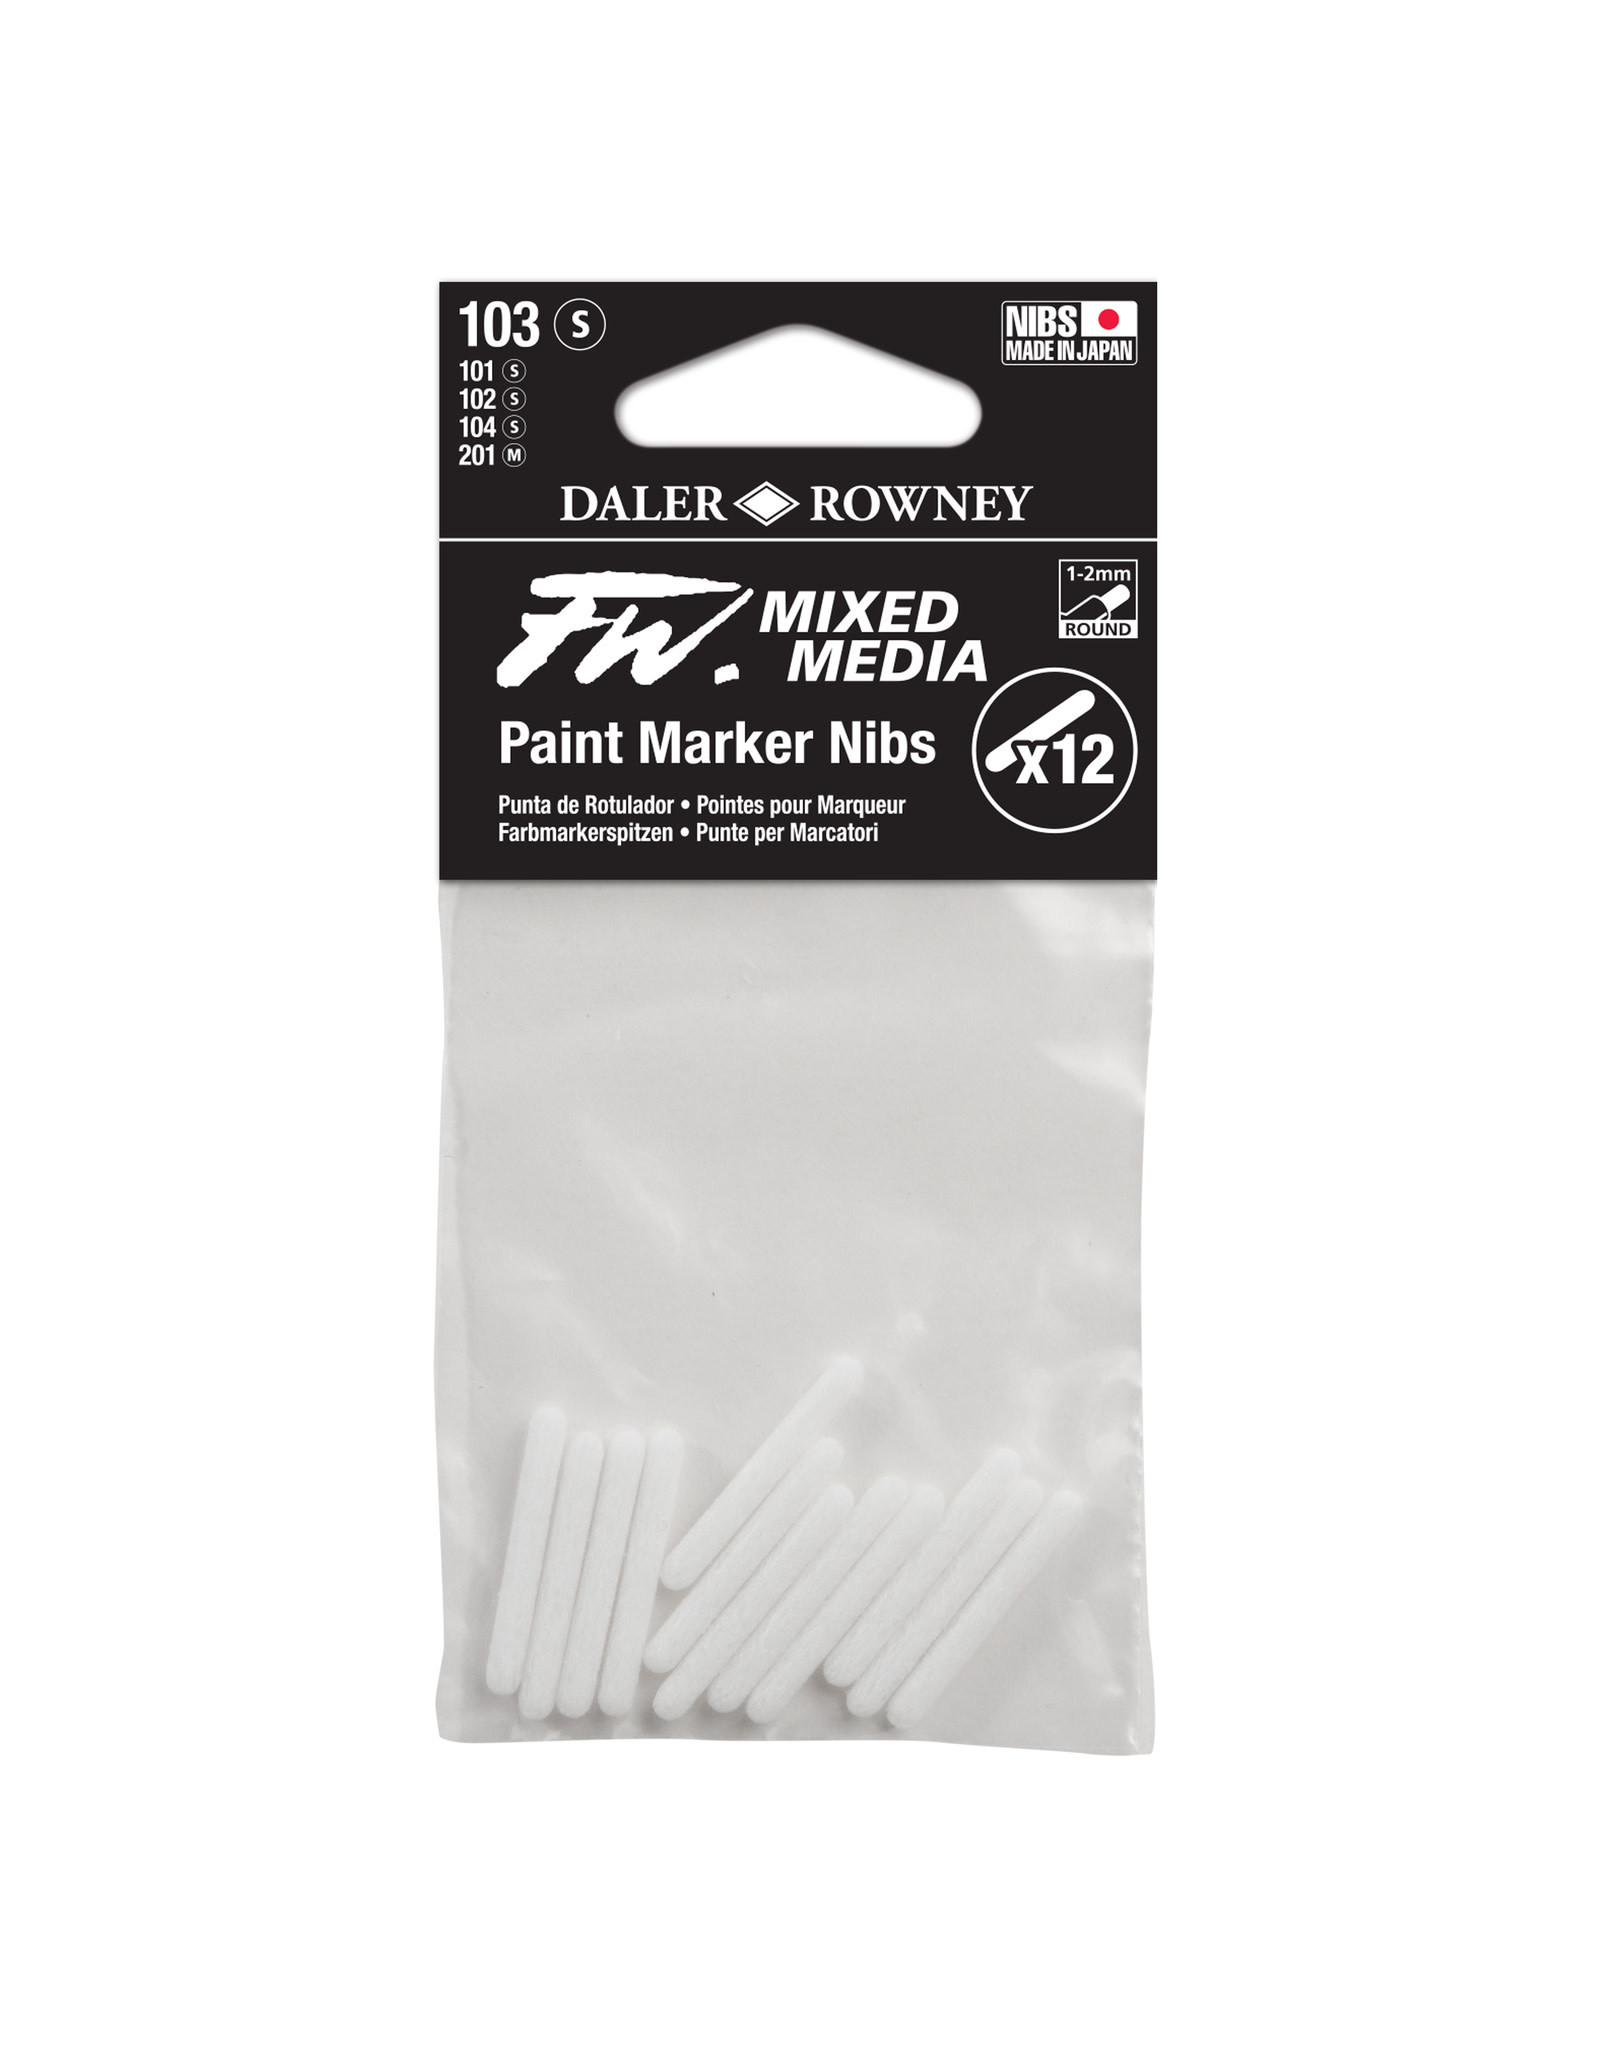 Daler-Rowney Daler-Rowney FW Paint Marker Nib Set of 12, 1-2mm, Round